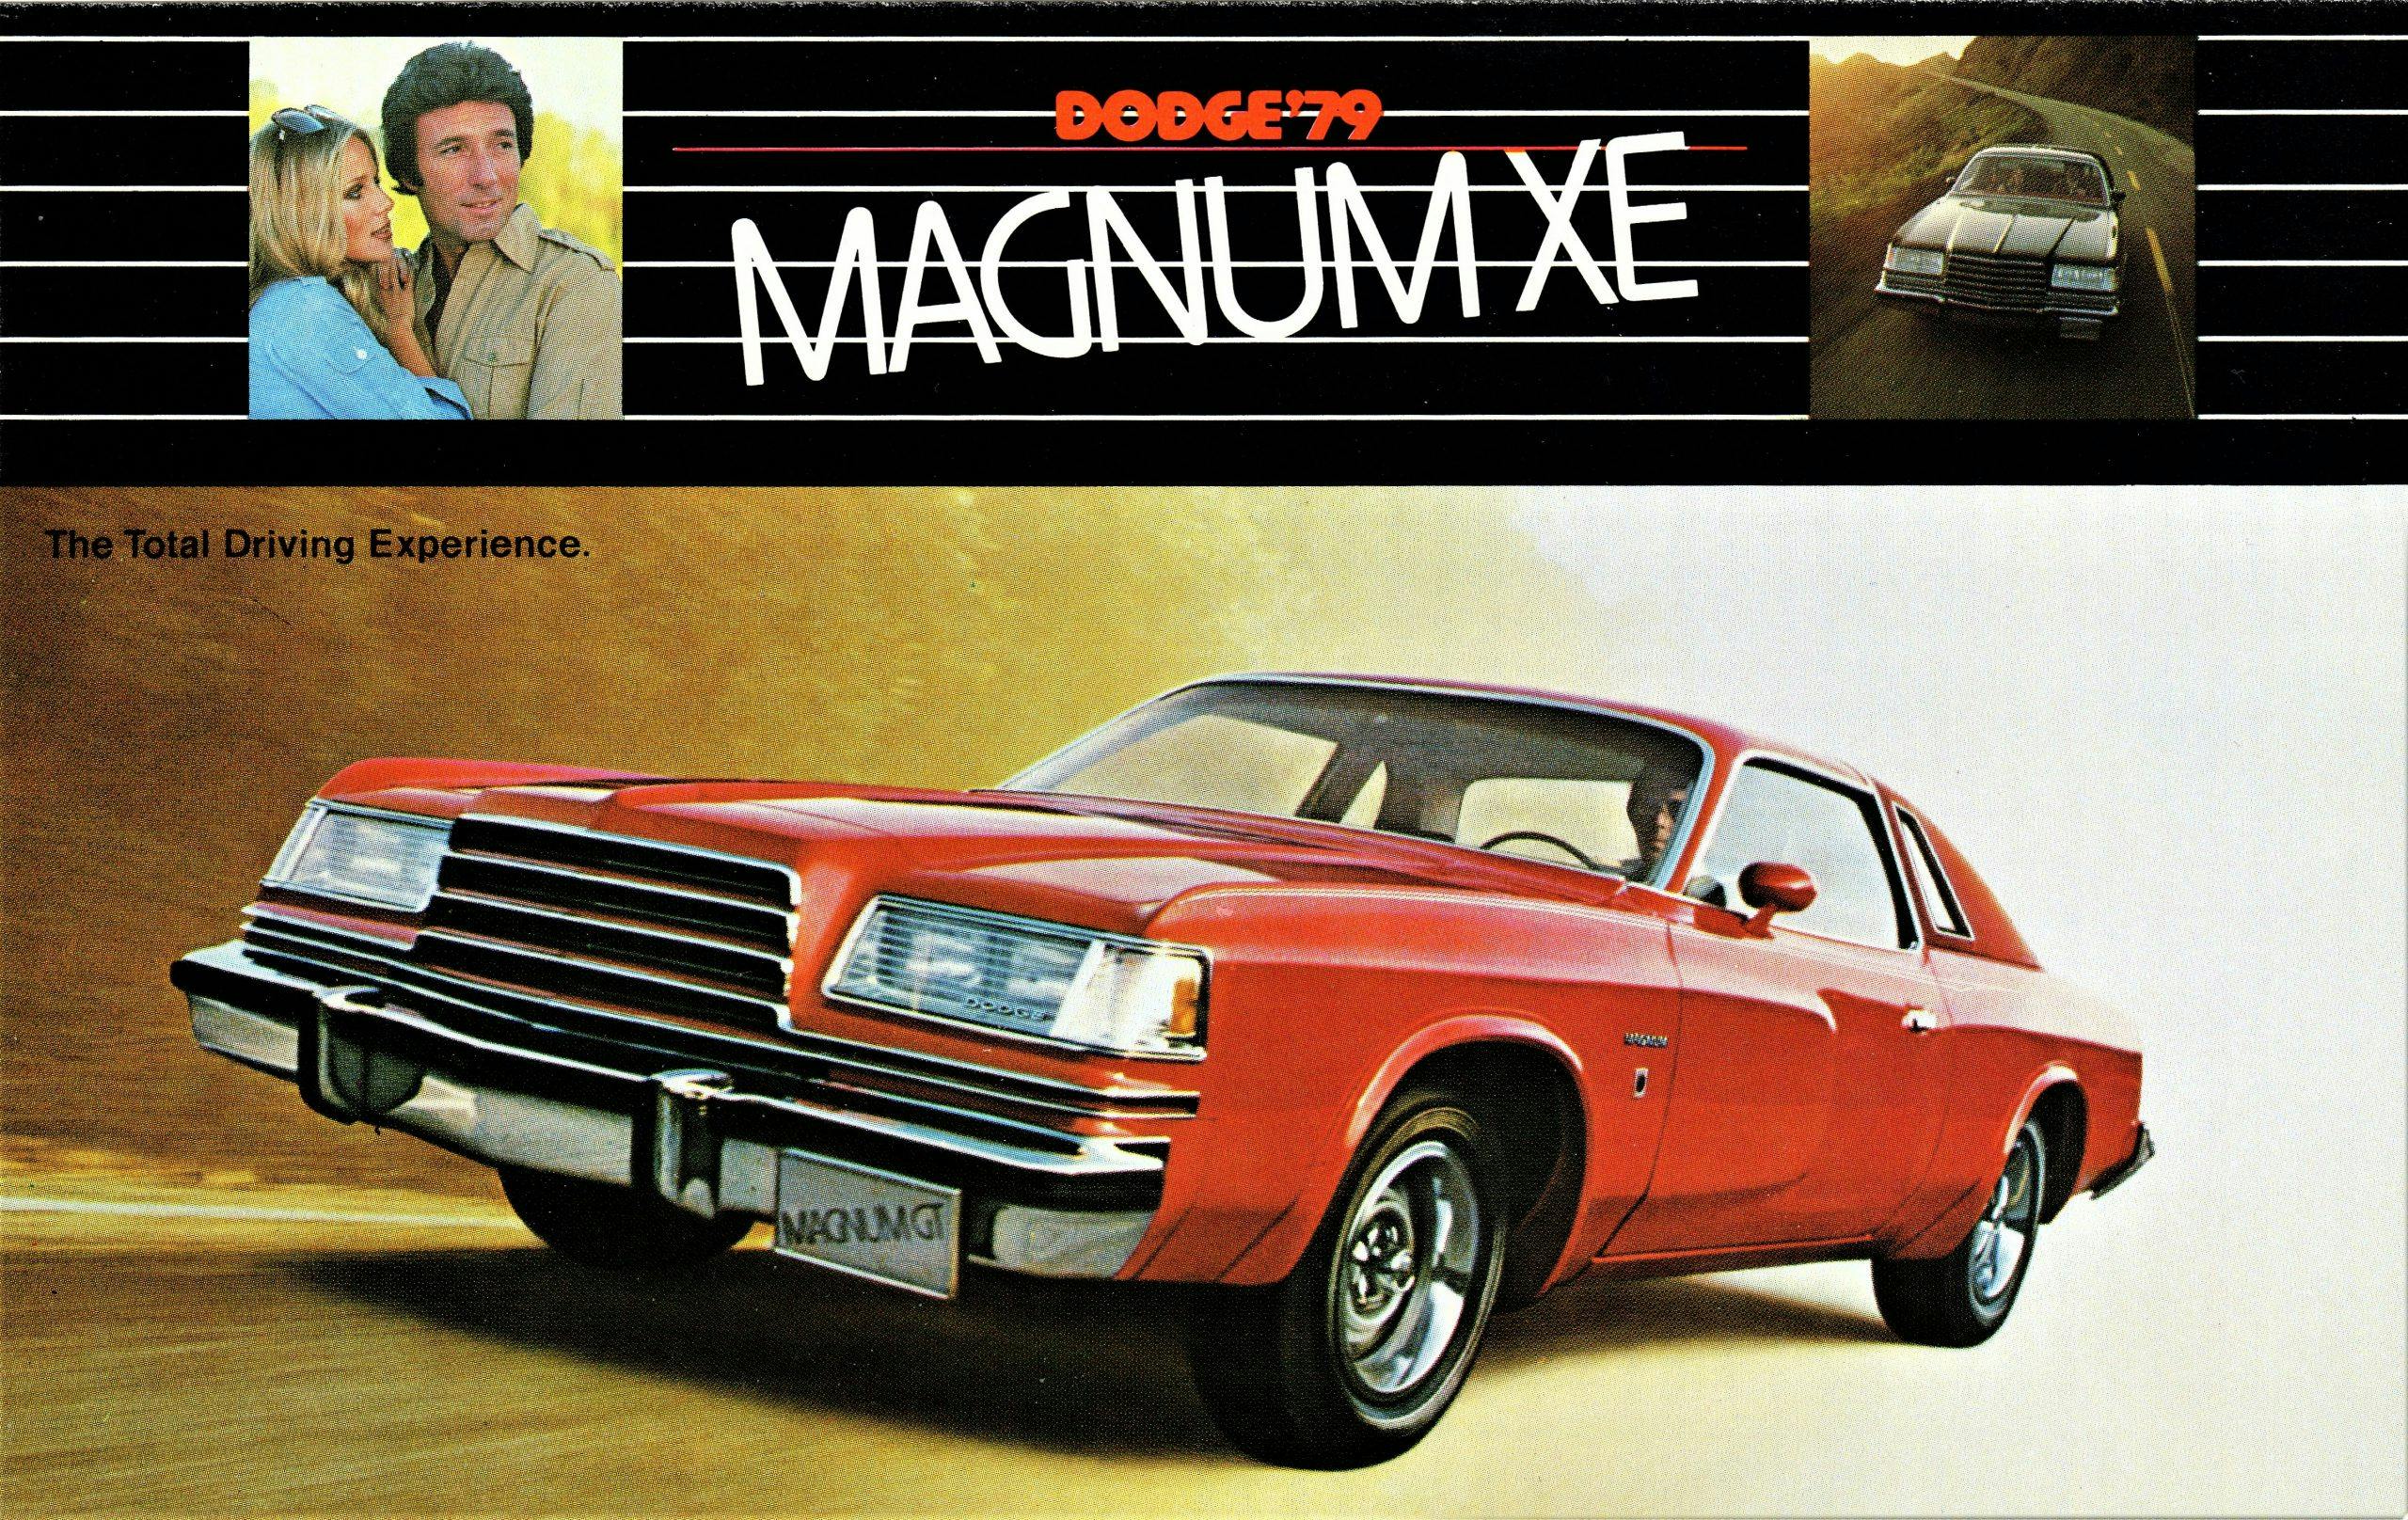 1979 Dodge Magnum XE advertisement